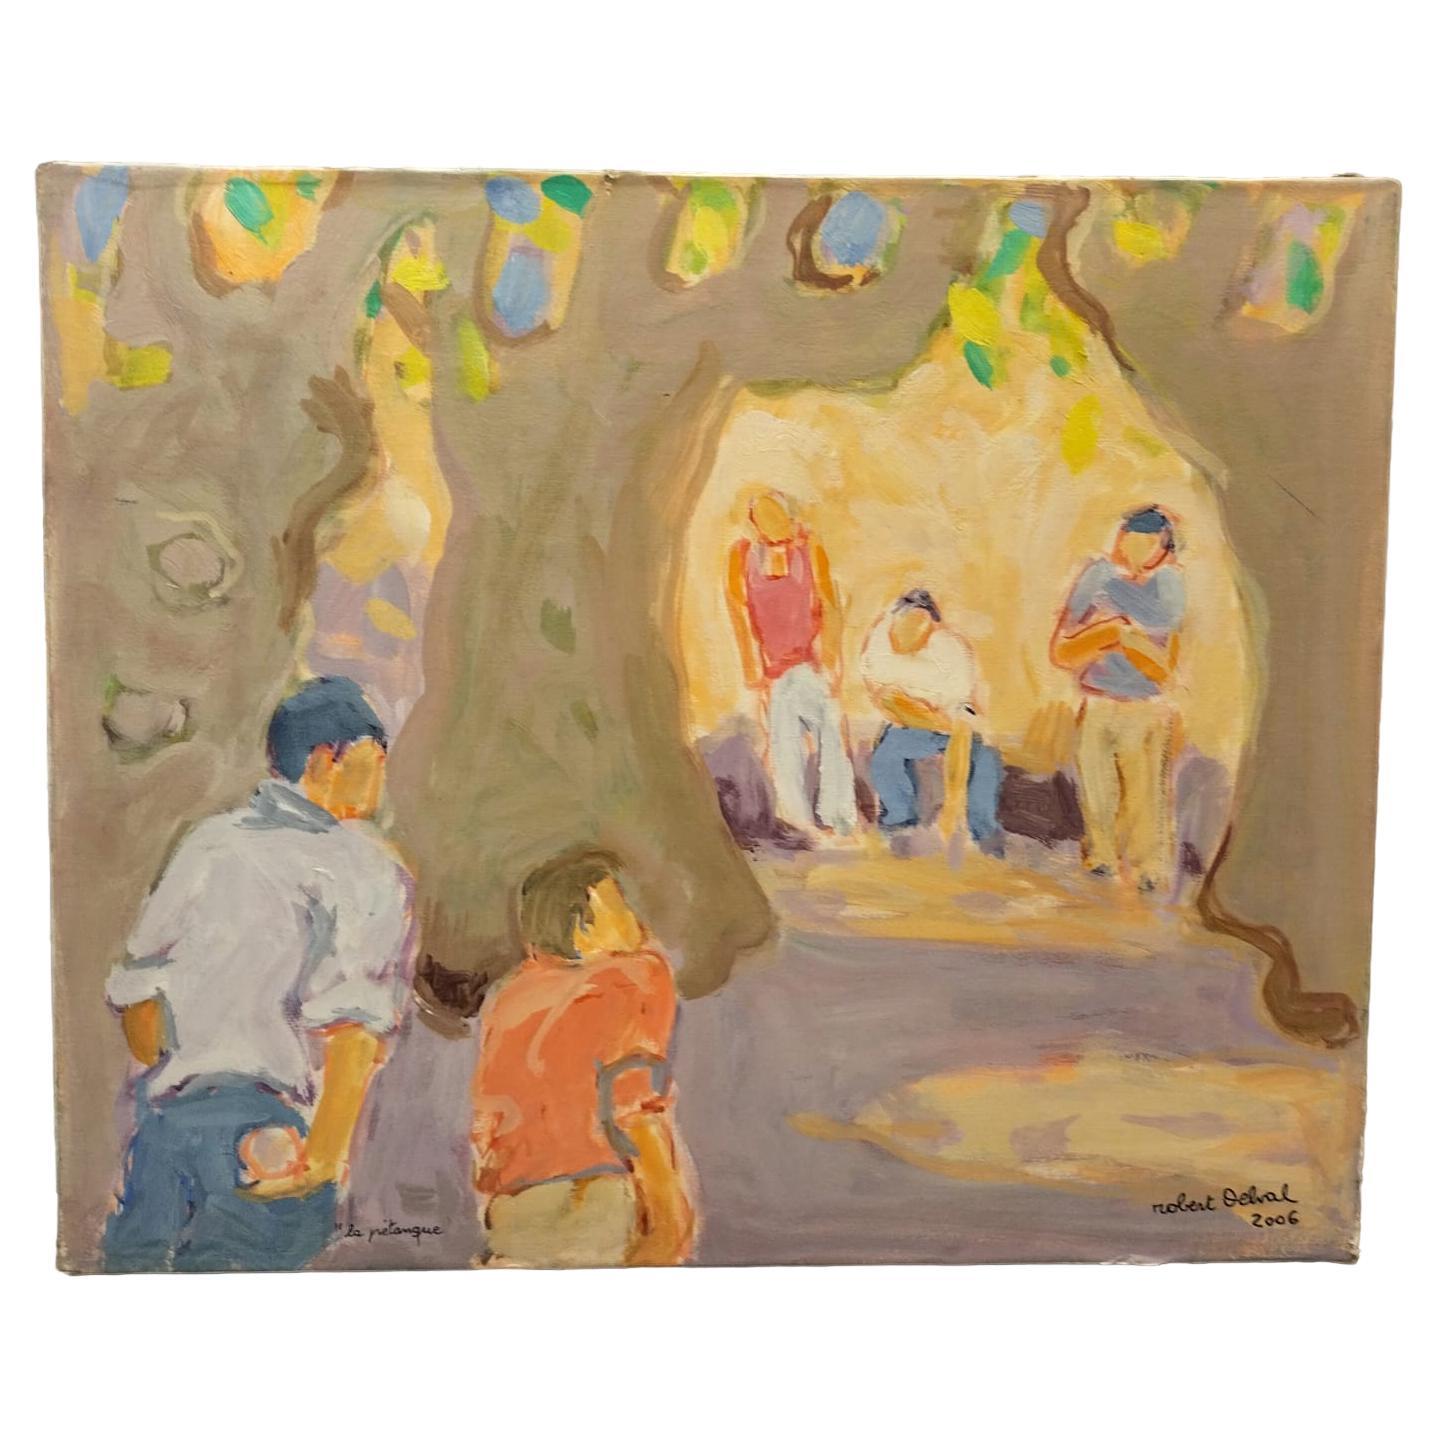 Oil-on-Canvas Painting 'La Pétanque' by Robert Delval (1934-)